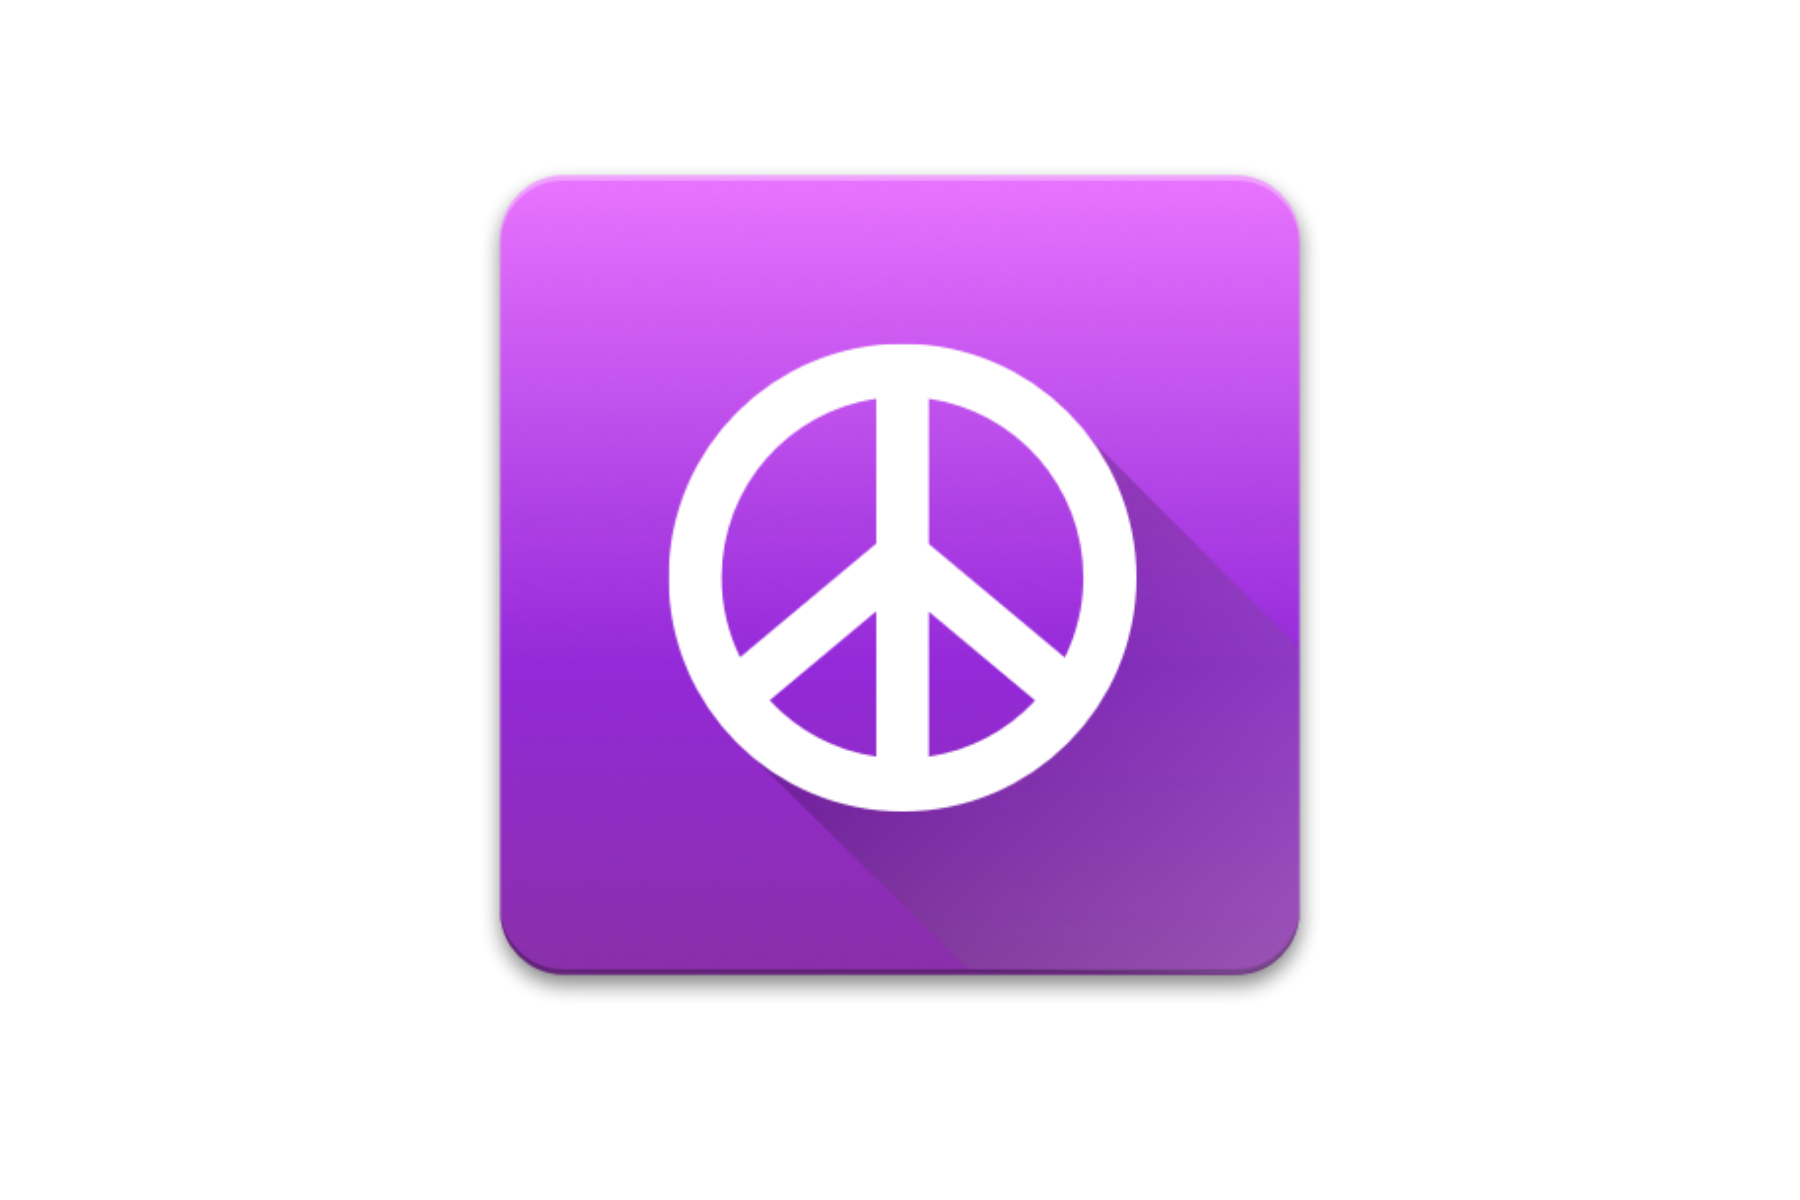 Craiglist's logo with a peace symbol inside a soft-cornered violet square